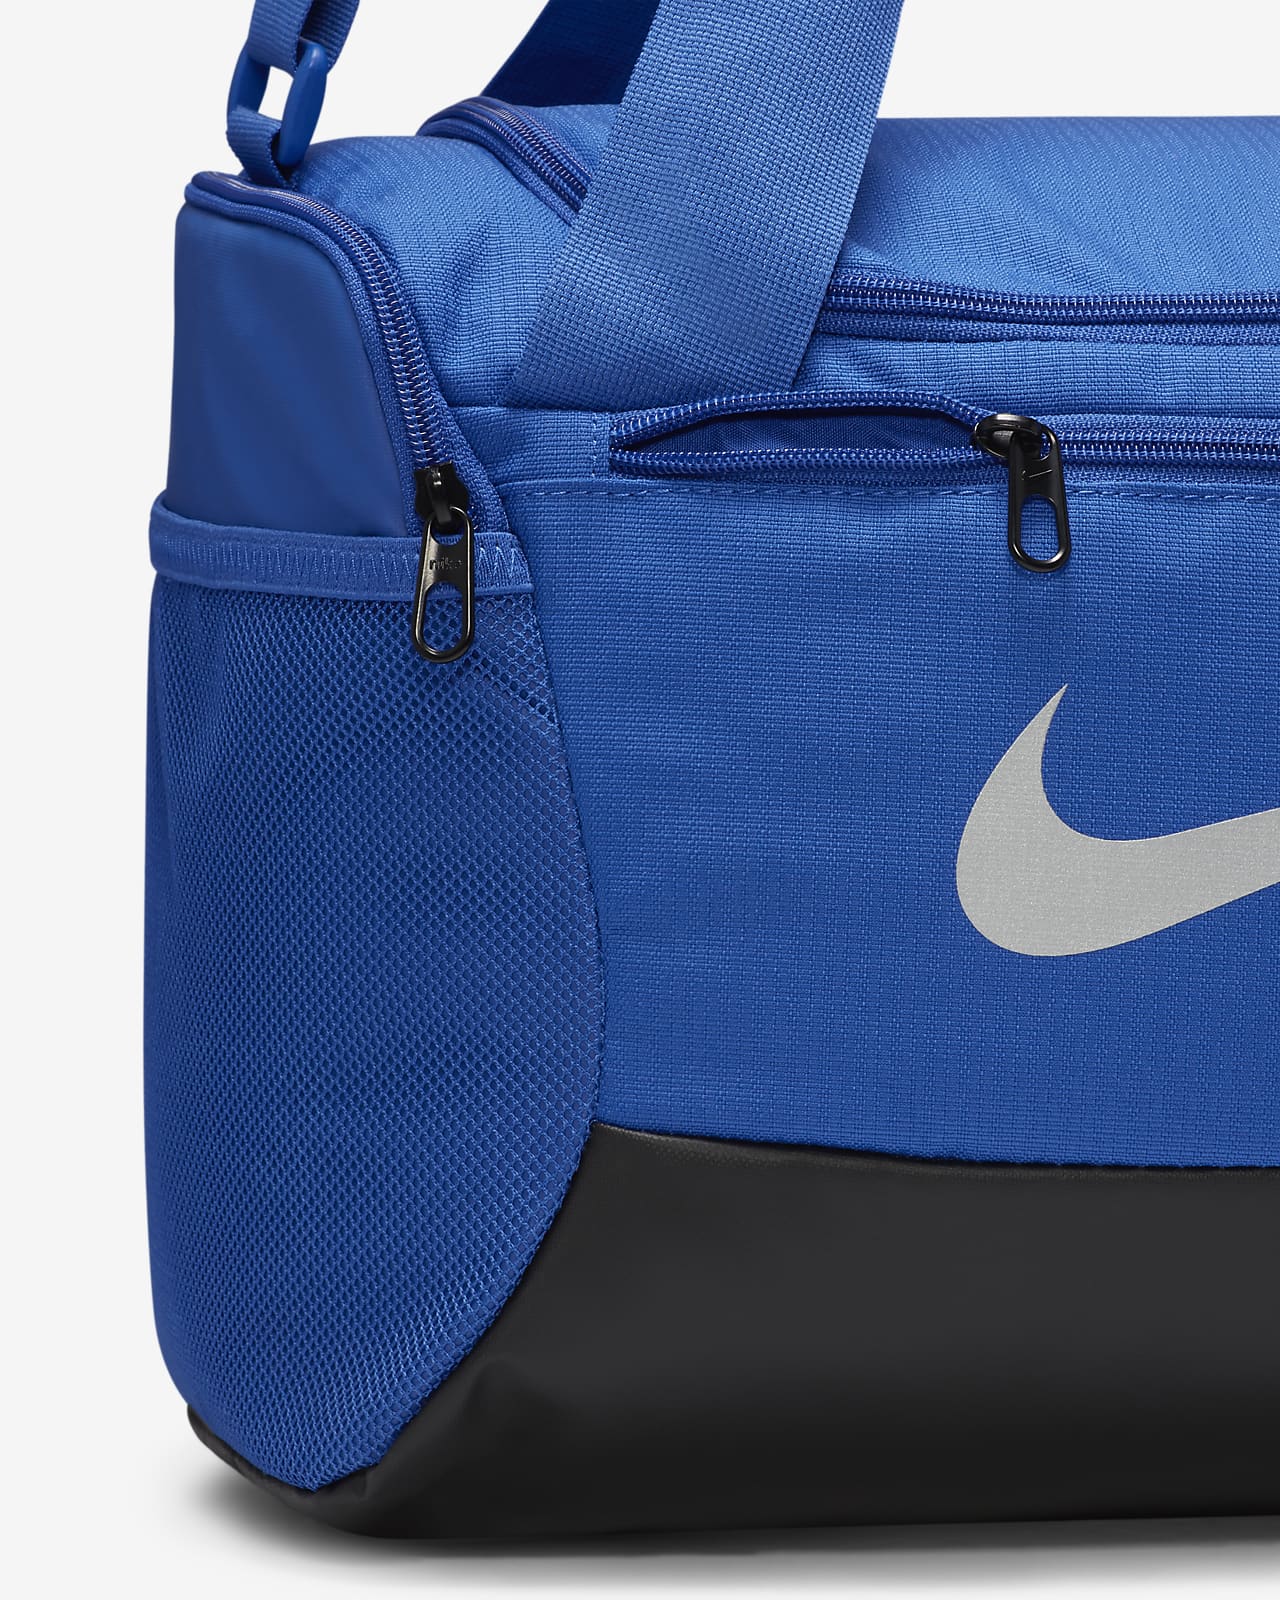 Nike Brasilia XS Extra Small Gym Duffel Bag Grey Red Ba5982 065 for sale  online